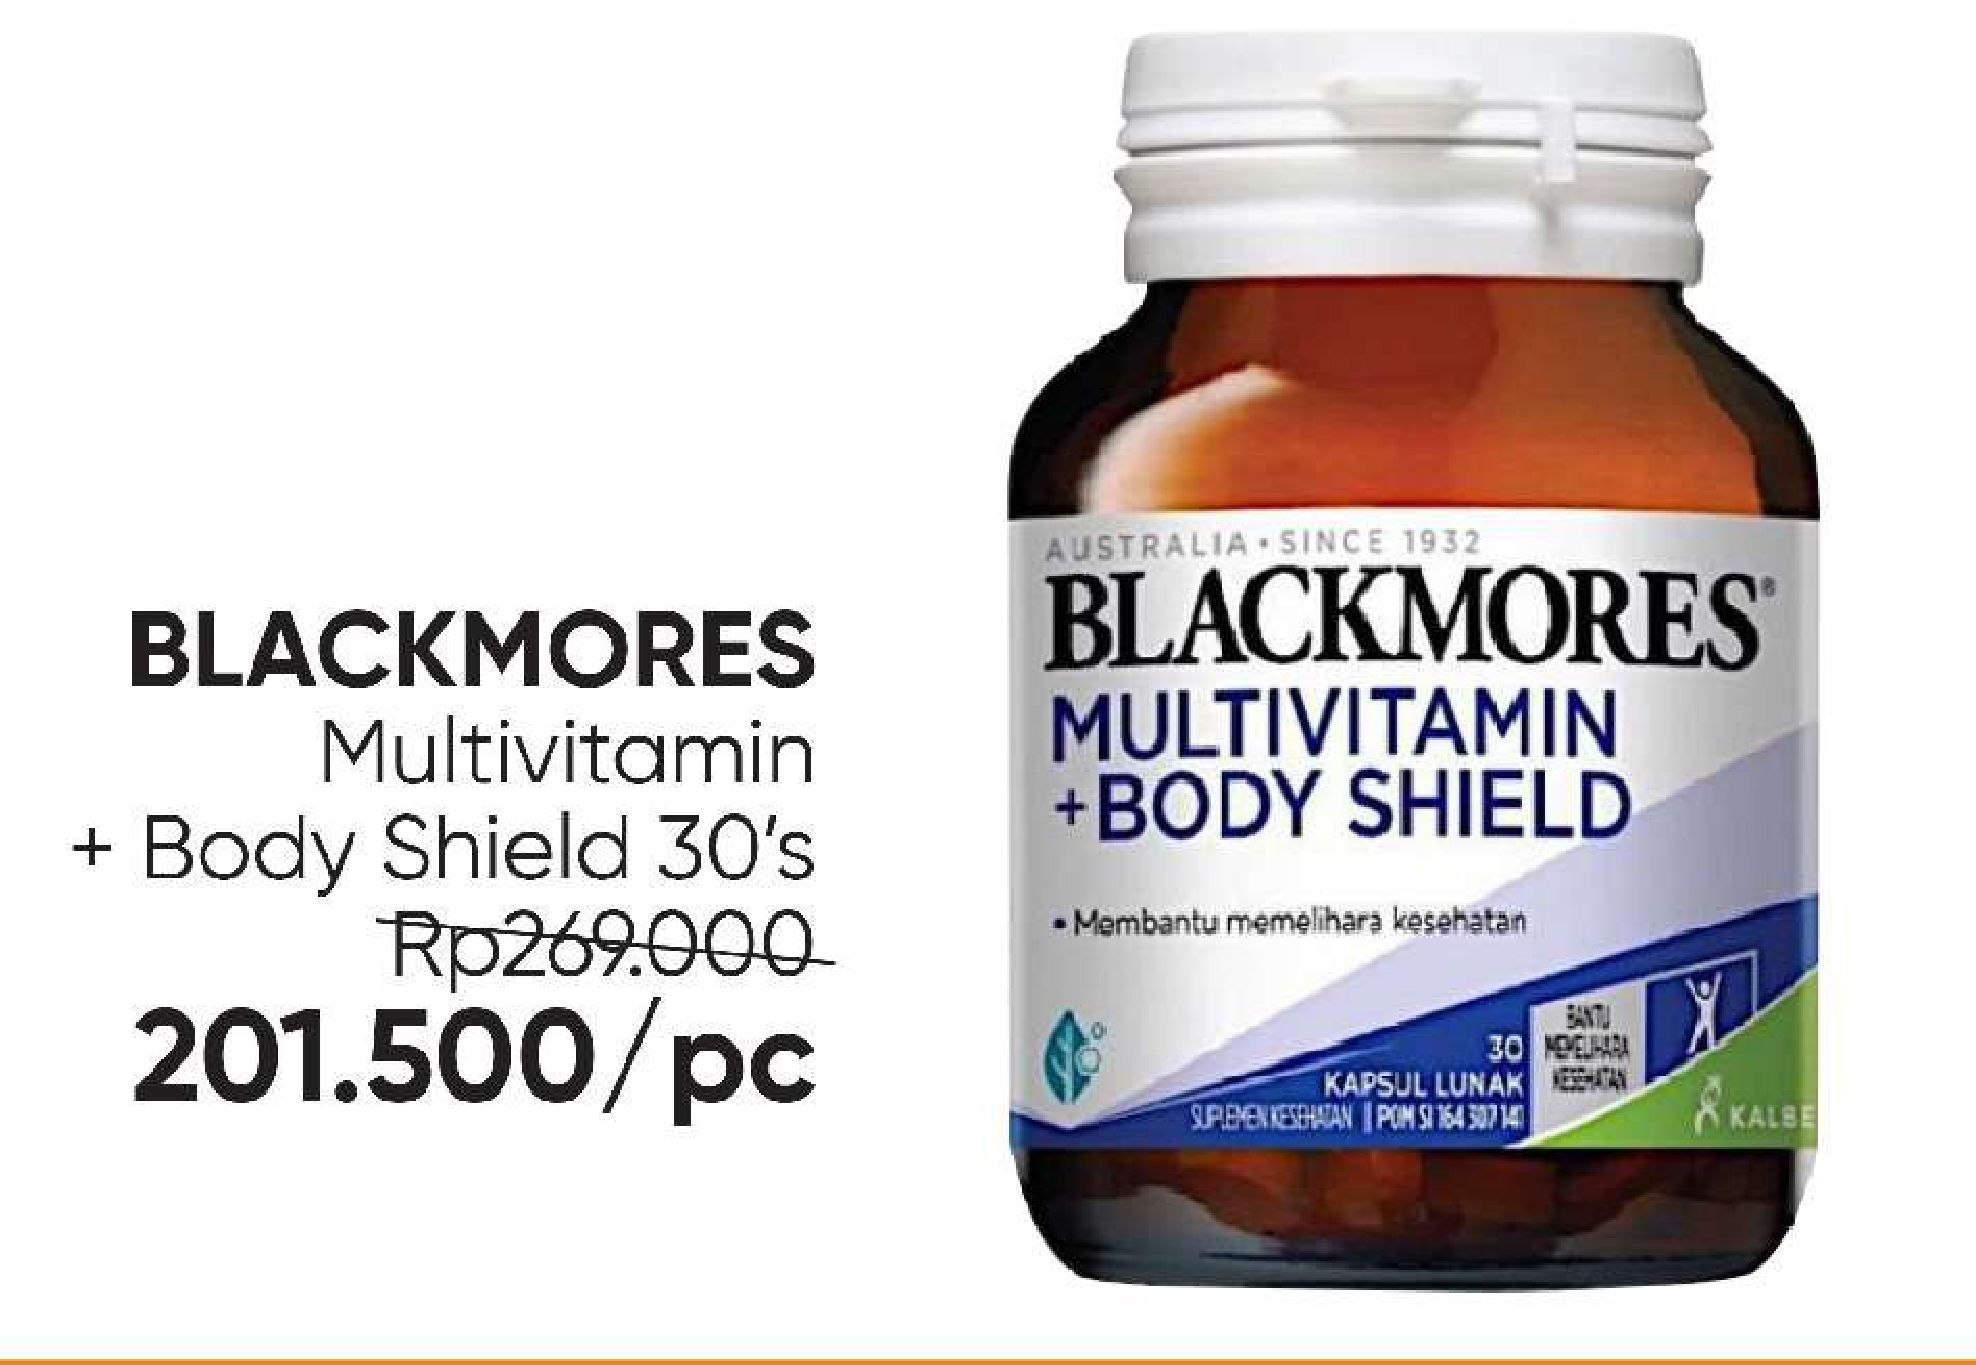 Blackmores Blackmores Multivitamin + Body Shield